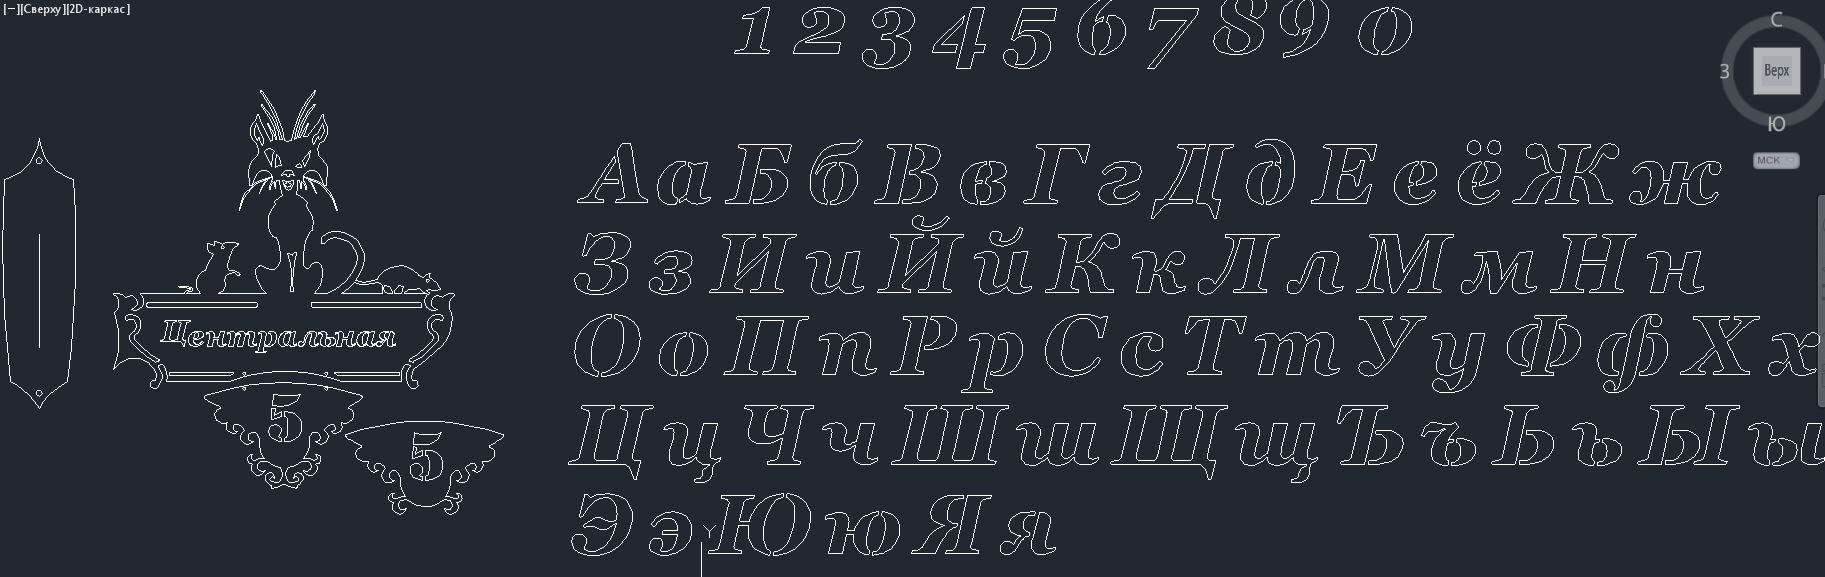 Шрифты для телеграмма на русском на андроид фото 106